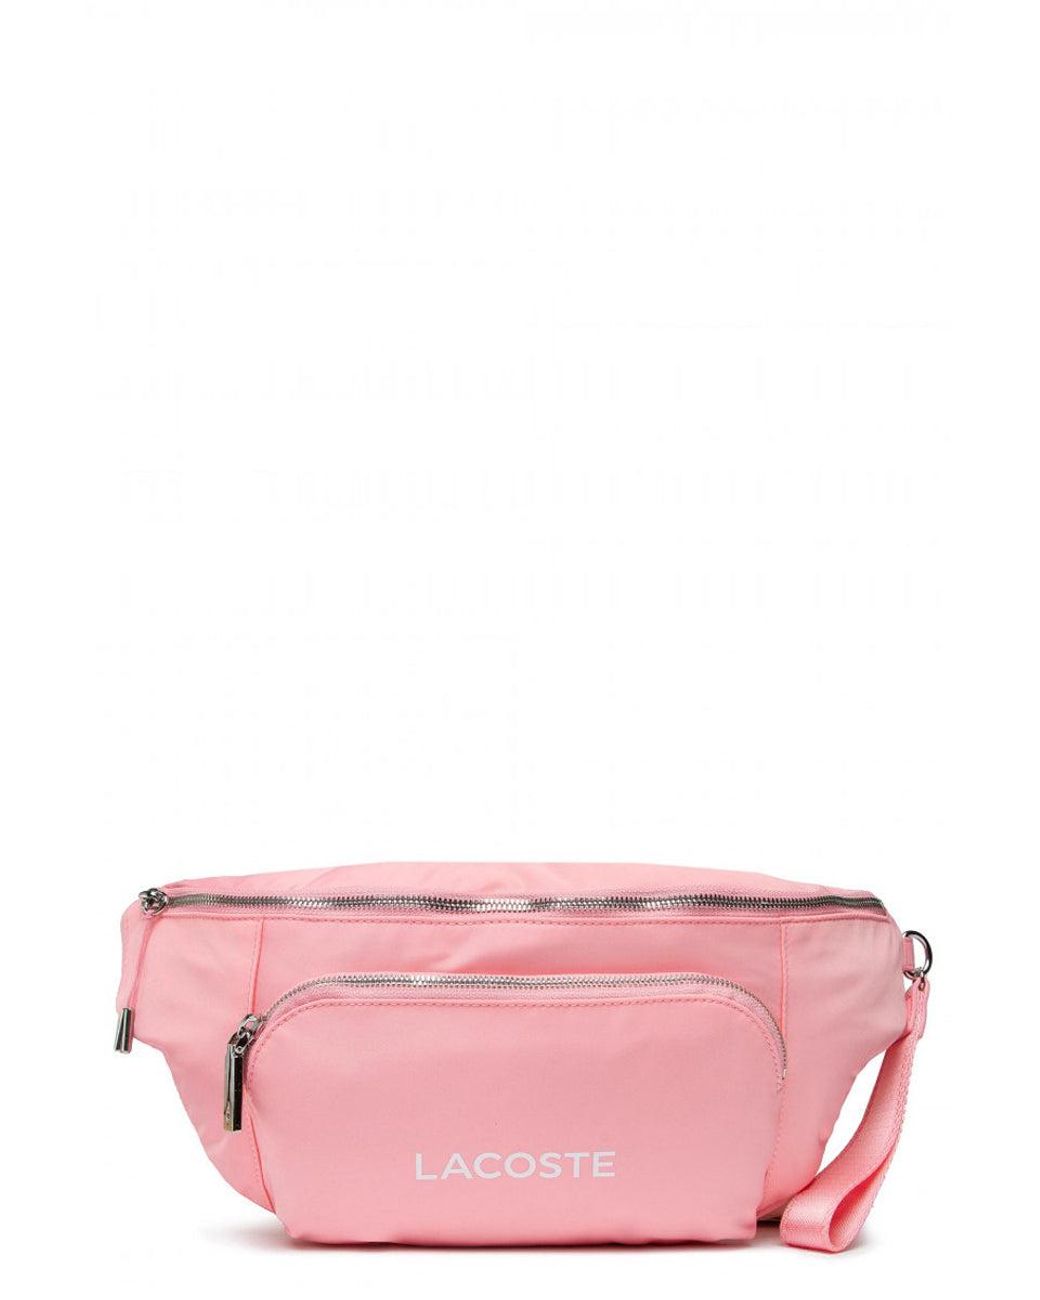 Lacoste Branded Oversized Nylon Waist Bag Lotus Blanc in Pink | Lyst